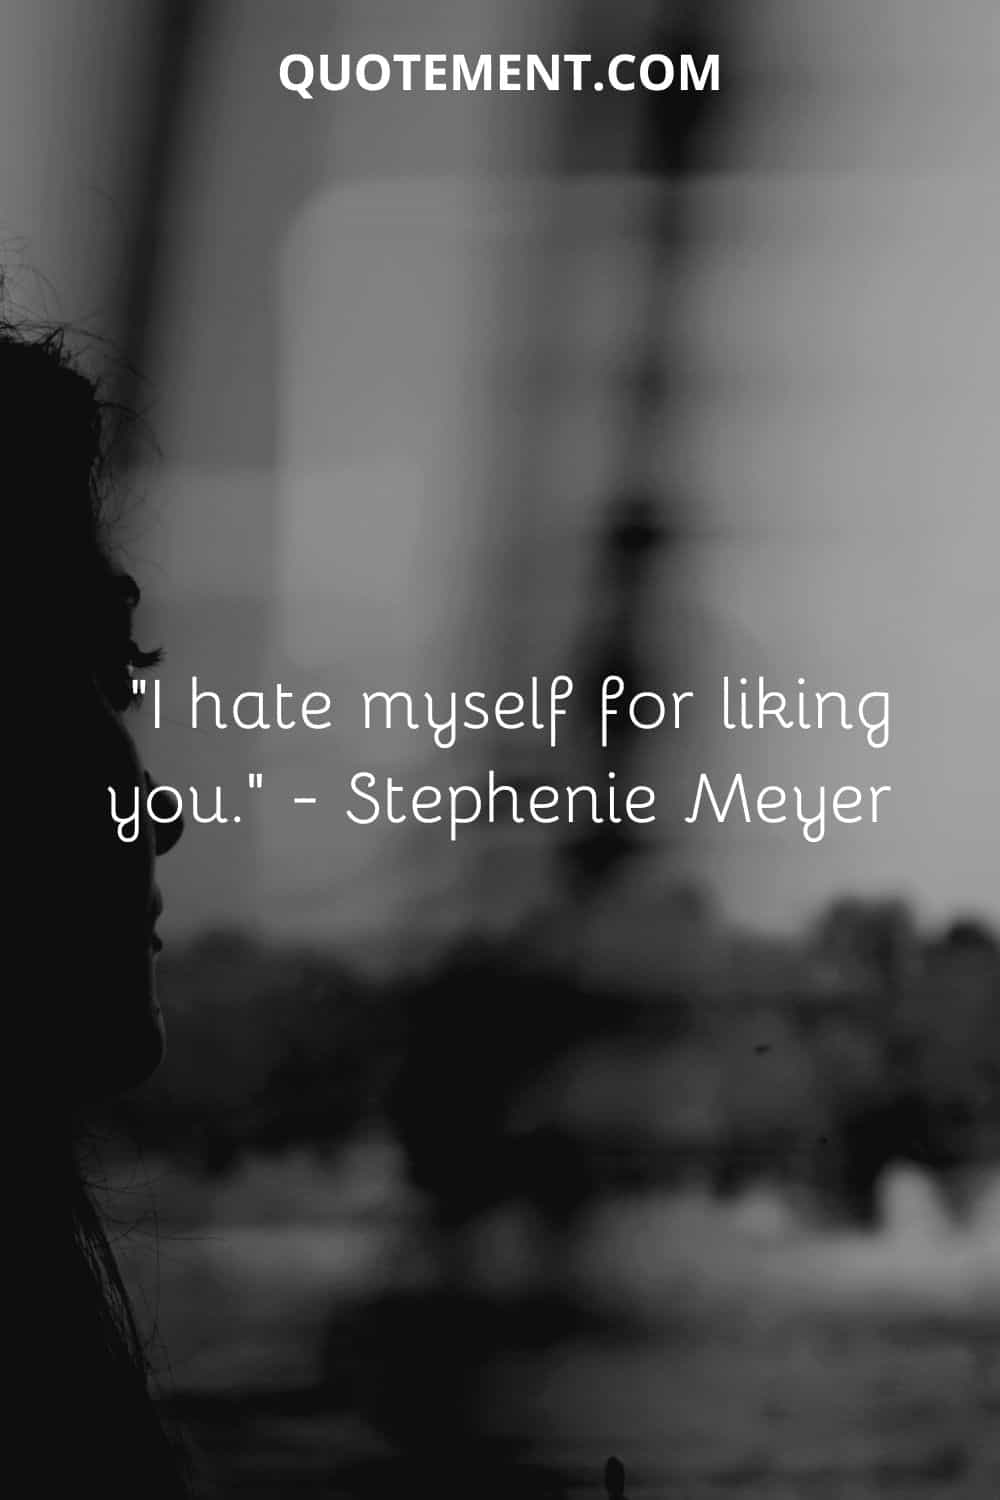 I hate myself for liking you